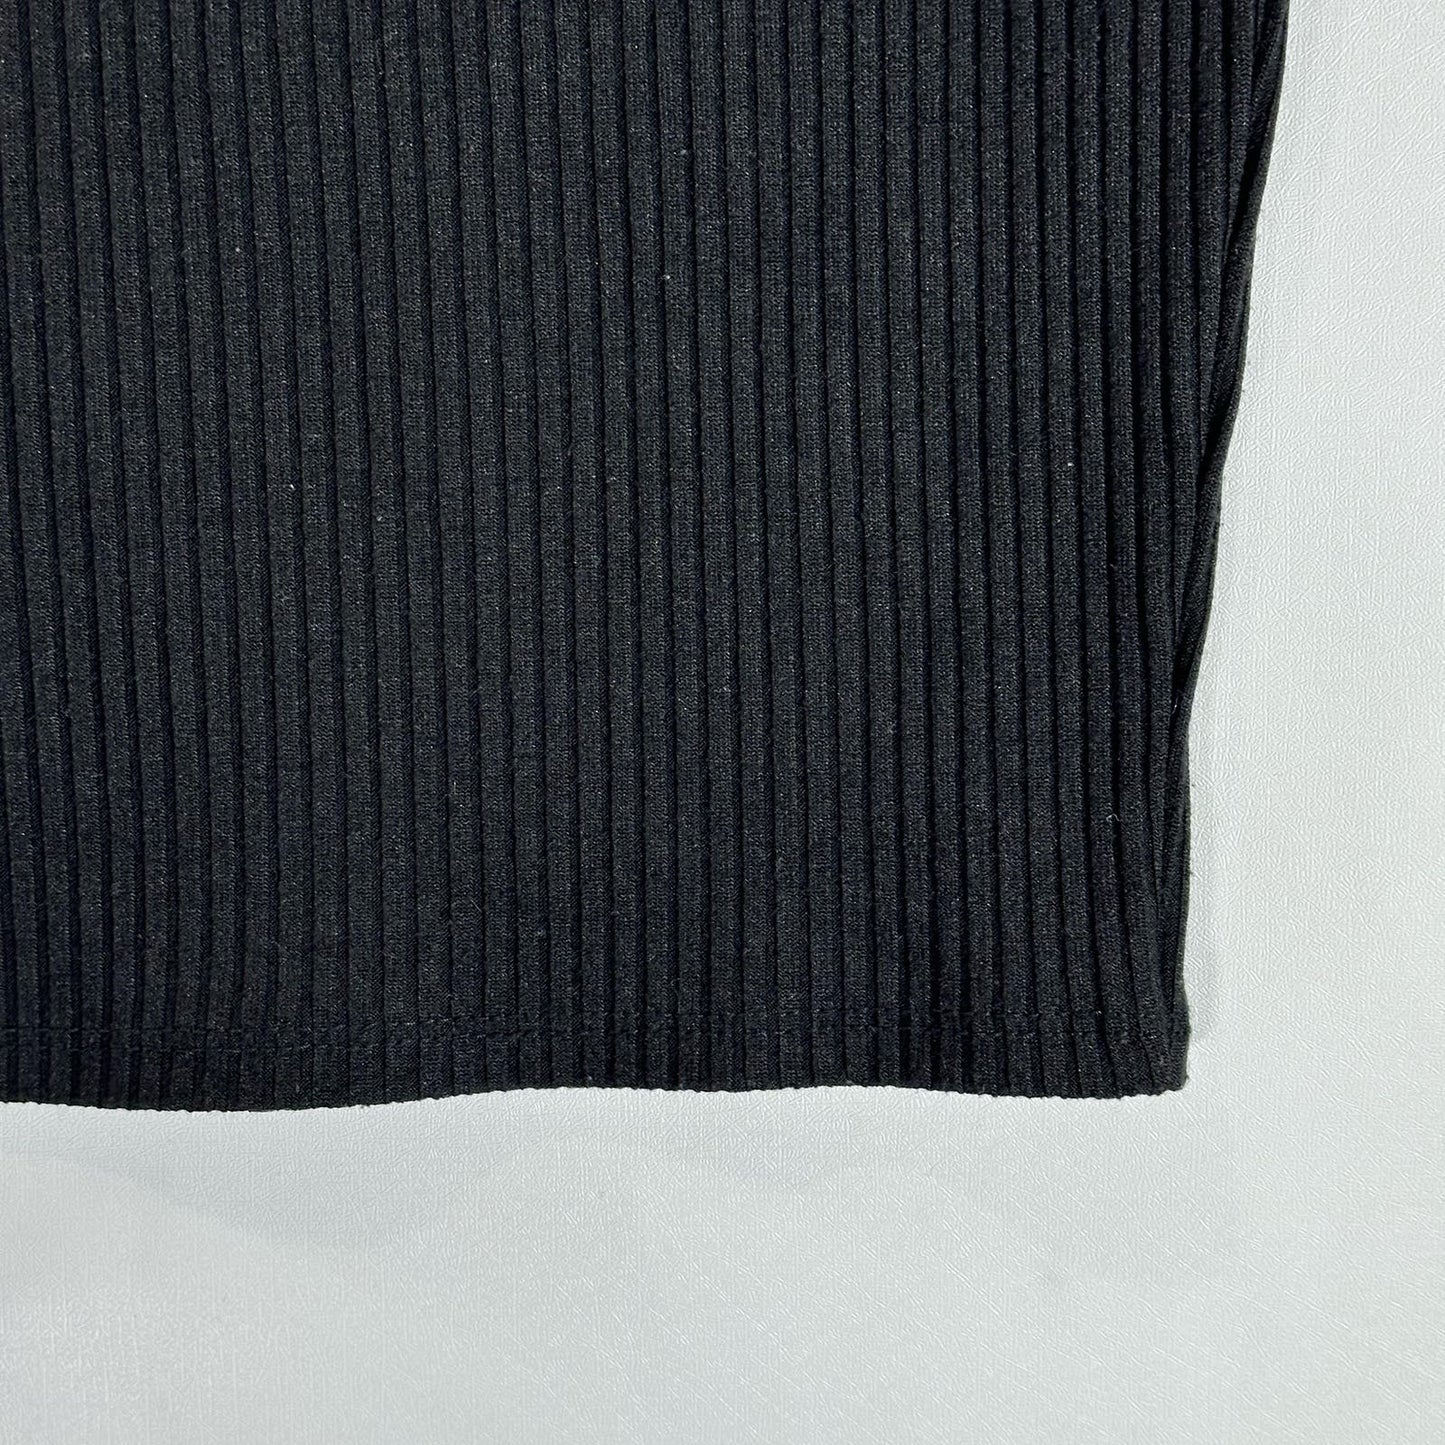 KENDALL & KYLIE Women's Black Ribbed One-Shoulder Bodycon Mini Dress SZ XS